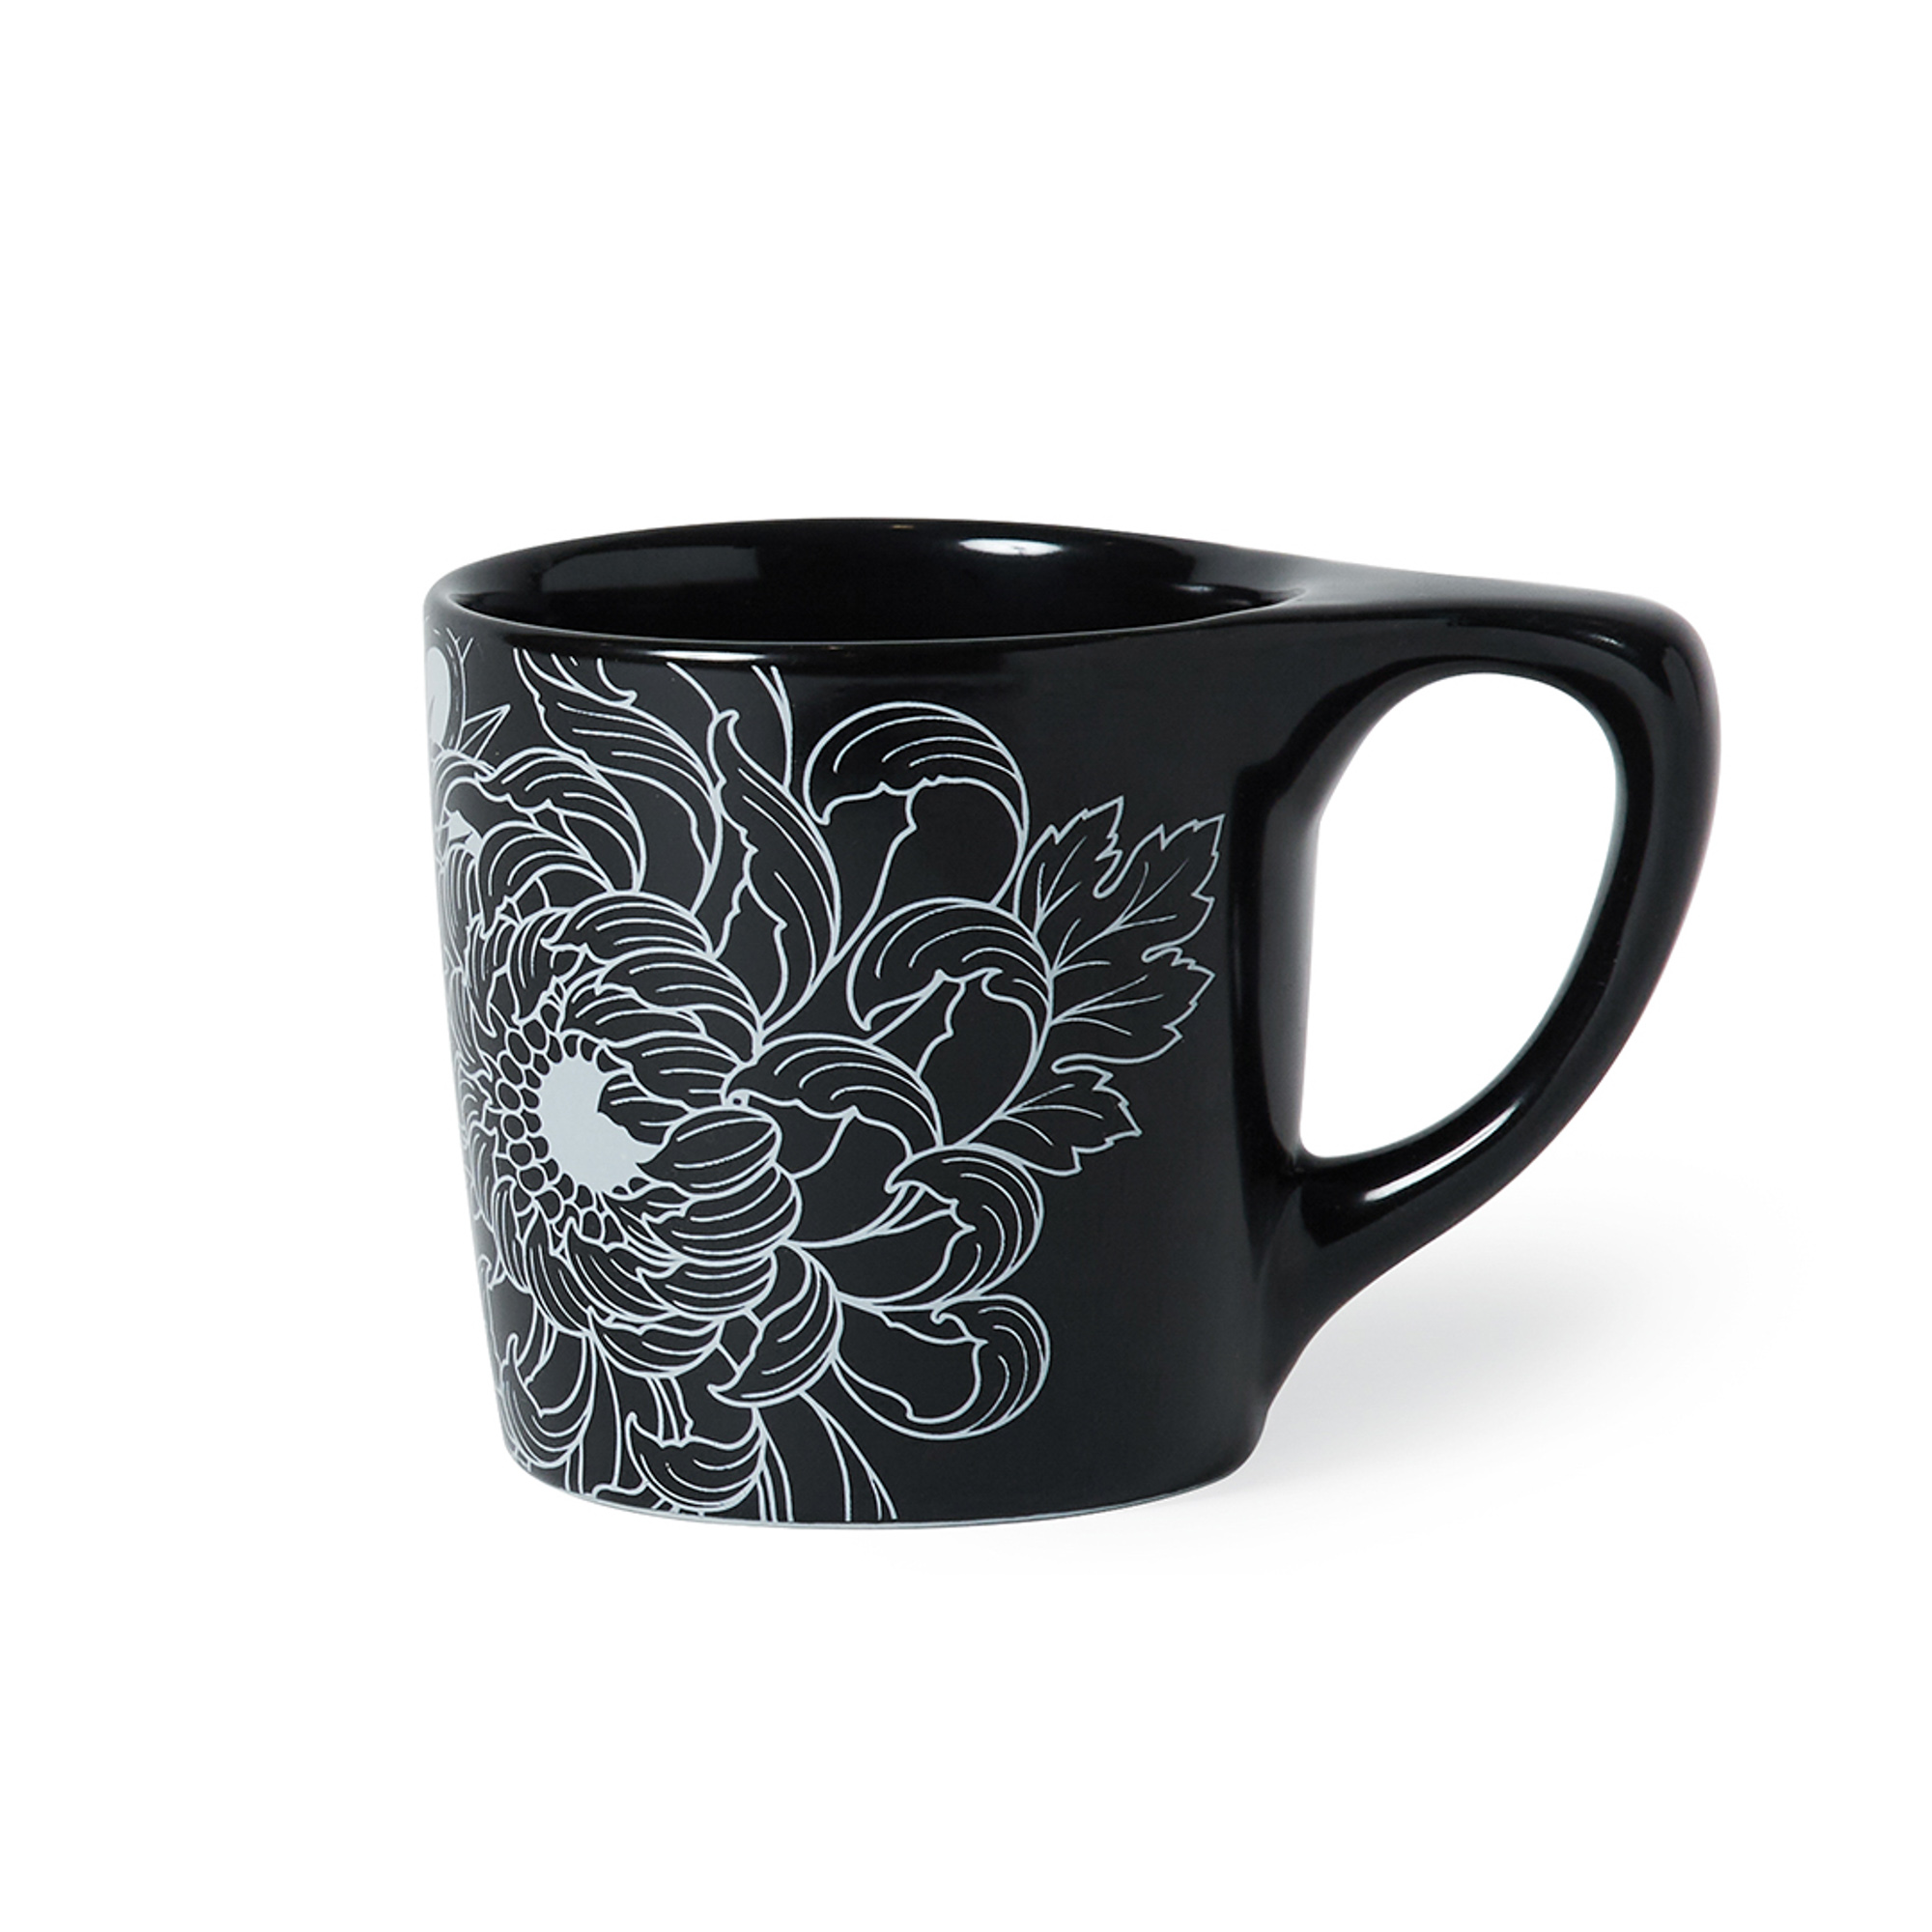 Aries Rhysing mug design